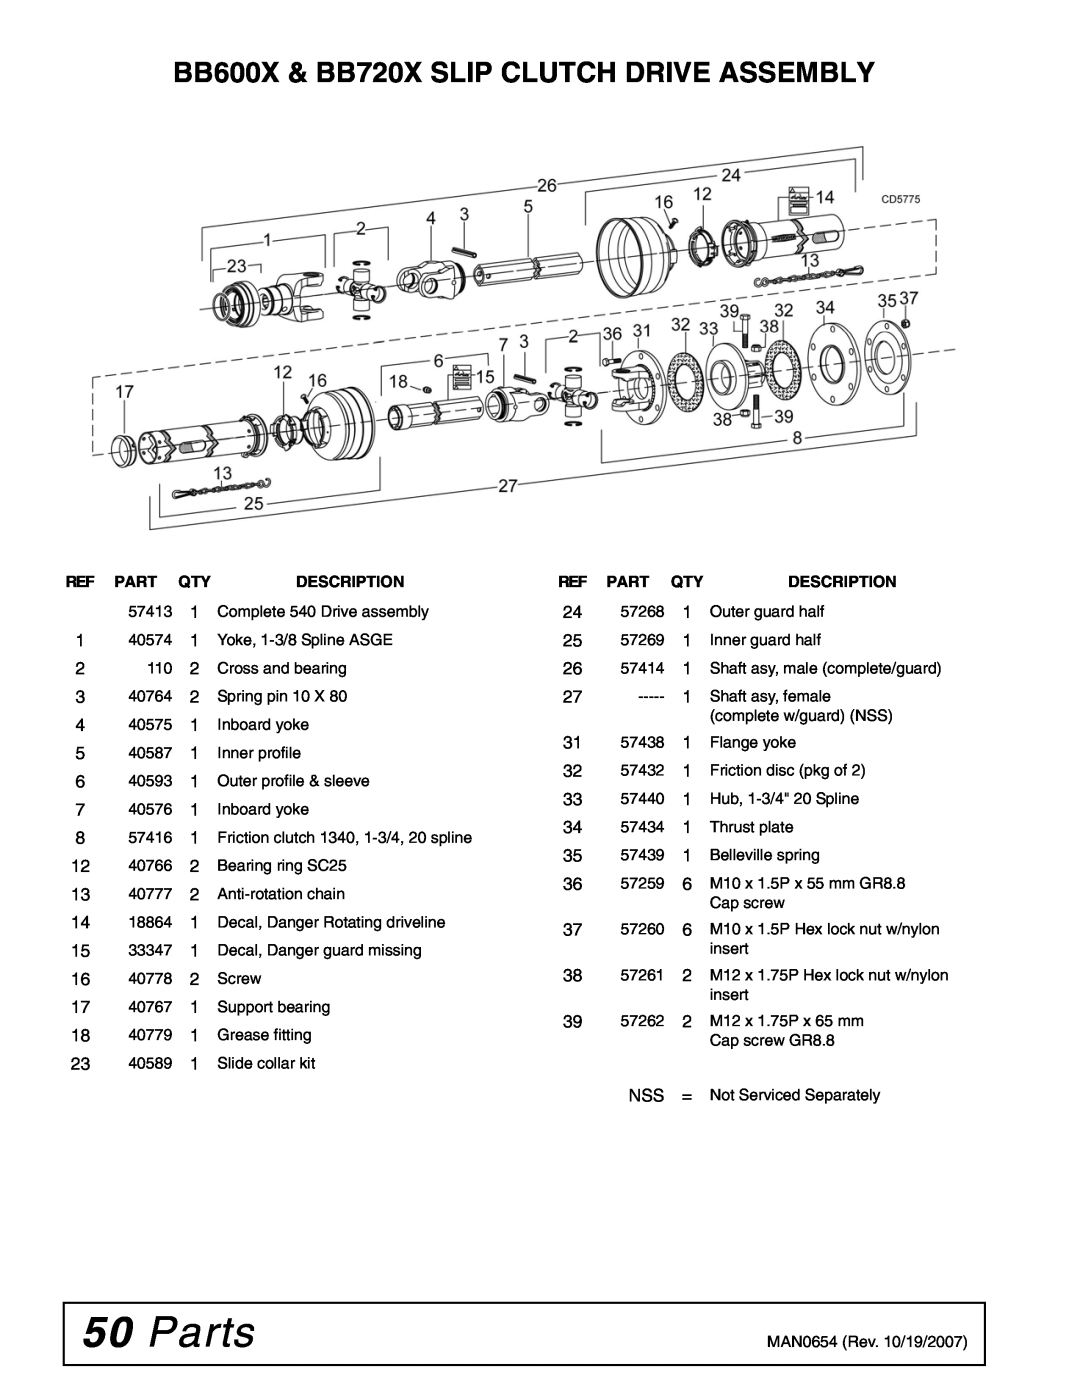 Woods Equipment BB840XP manual Parts, BB600X & BB720X SLIP CLUTCH DRIVE ASSEMBLY, Description, Ref Part Qty 